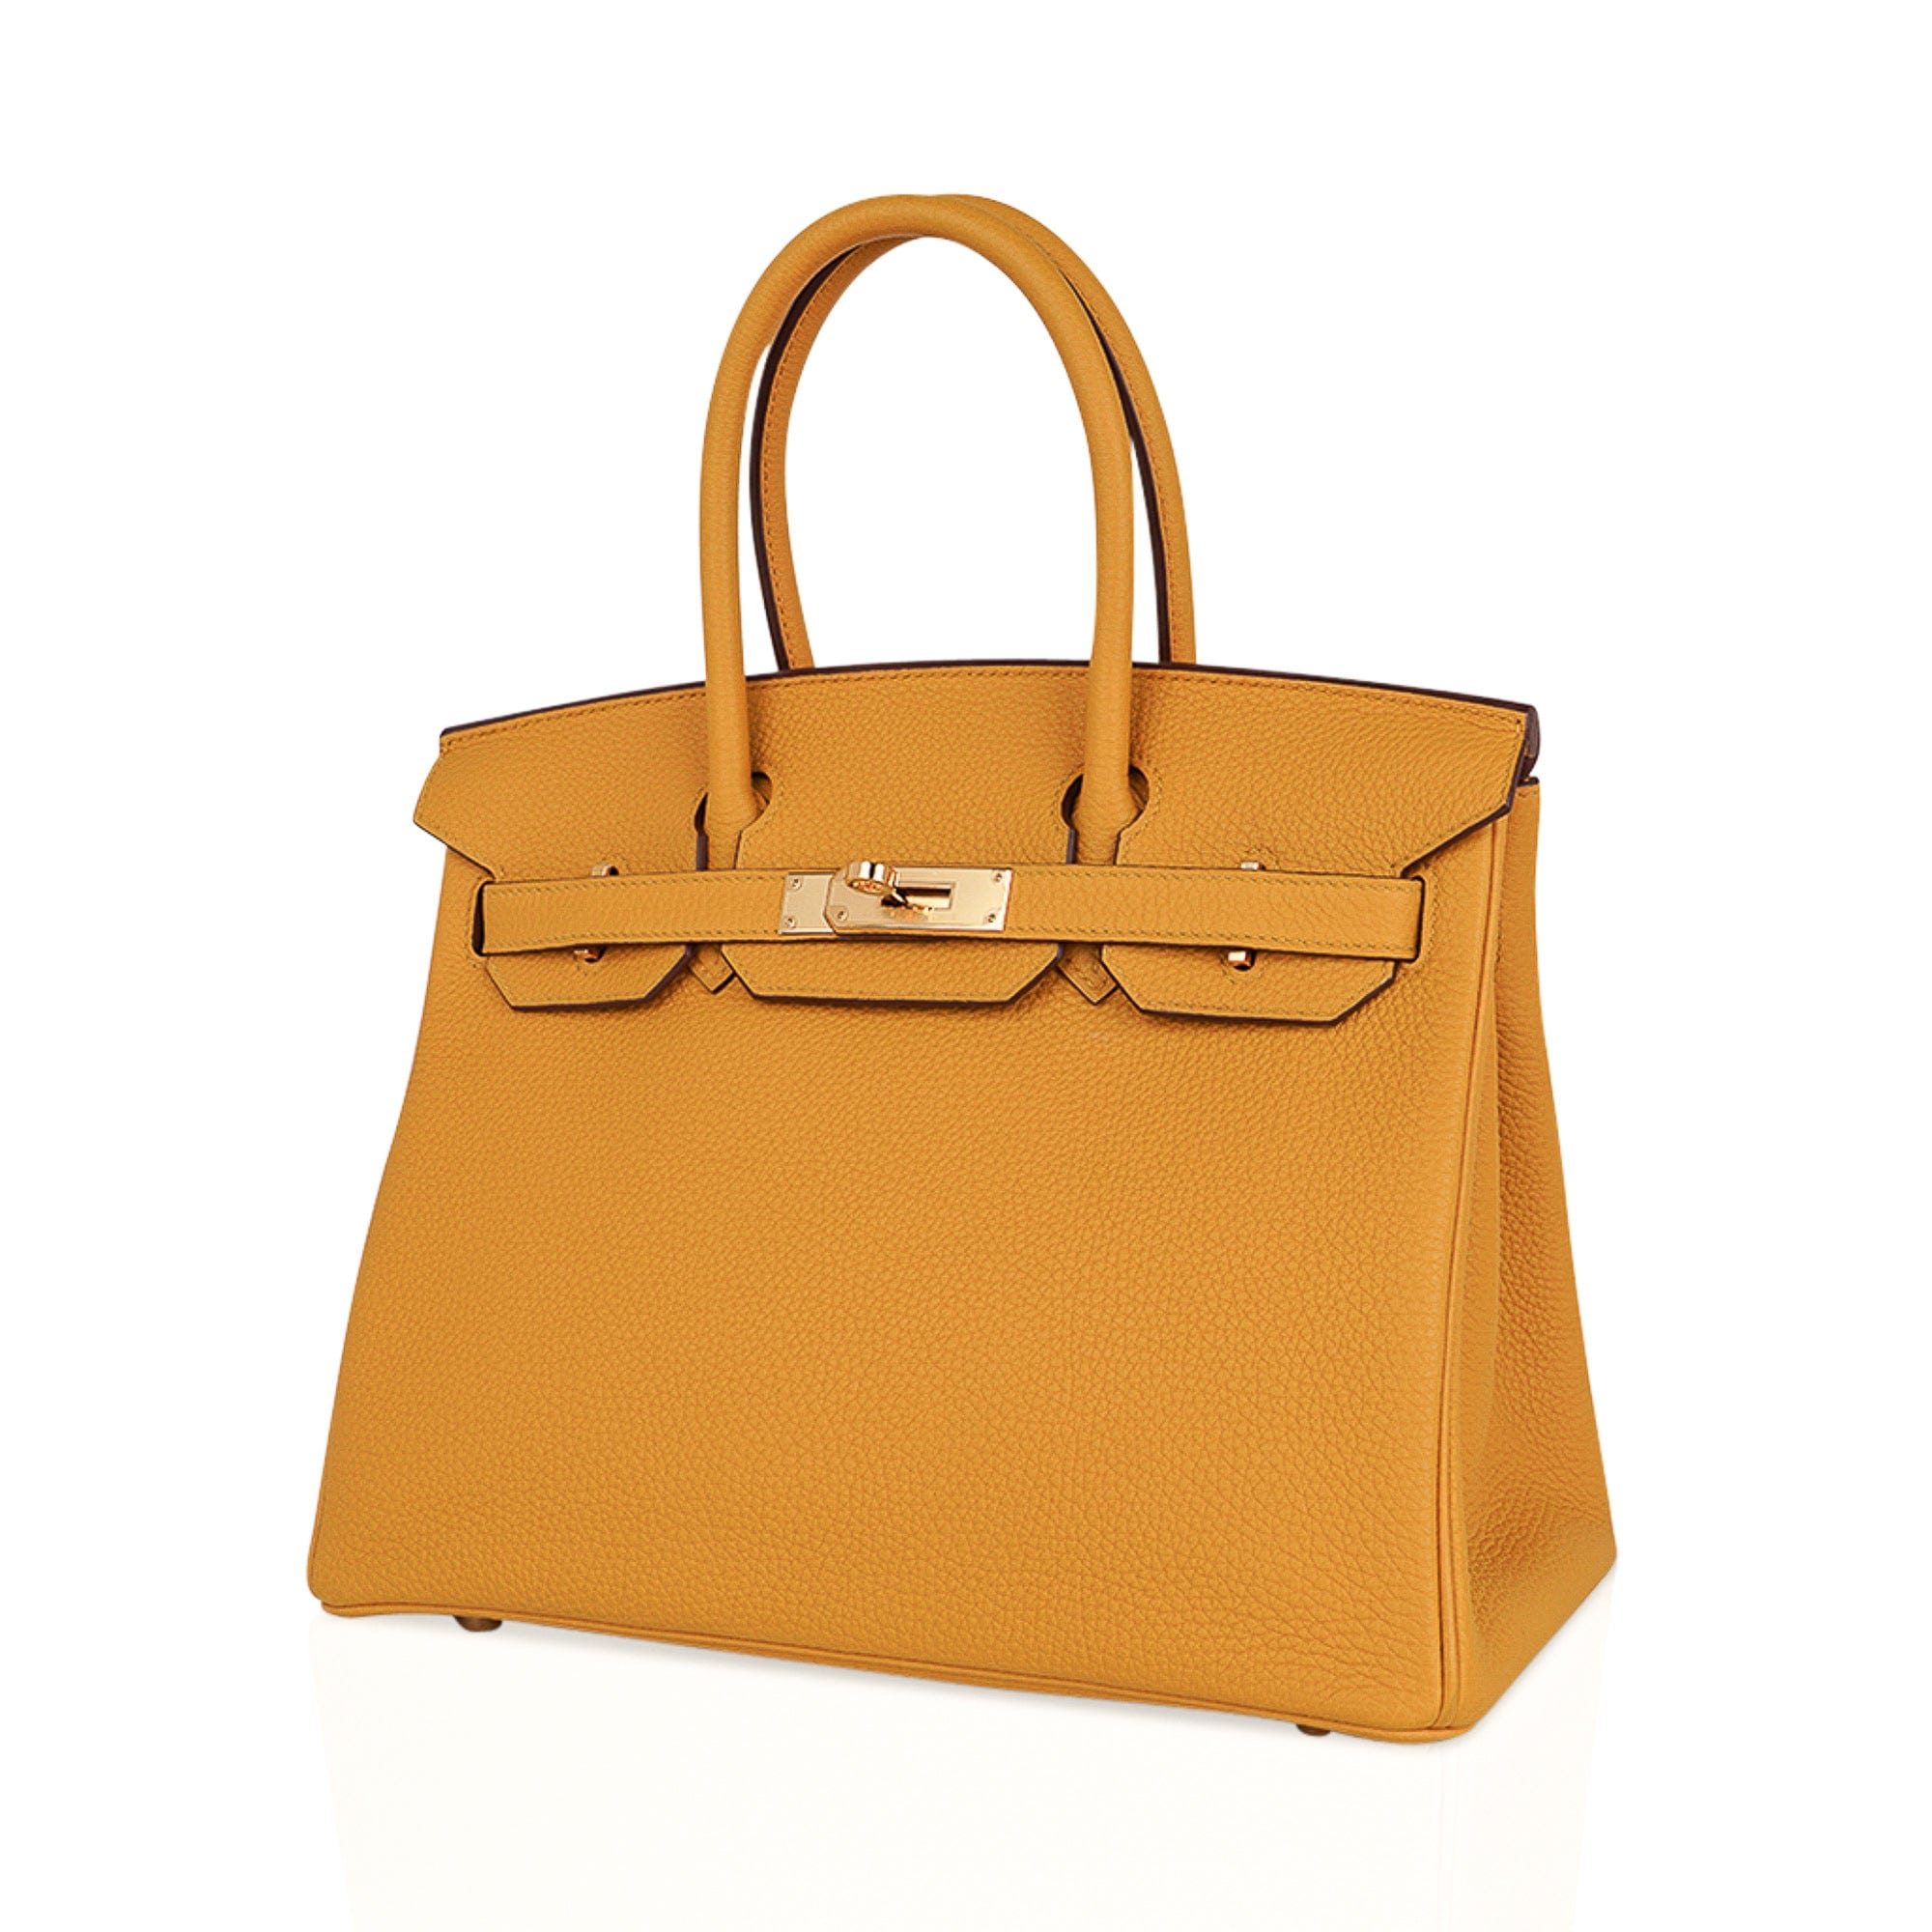 Hermes Birkin Bag Togo Orange 30 Women's Handbag - 30-ORANGE-TOGO-GOLD